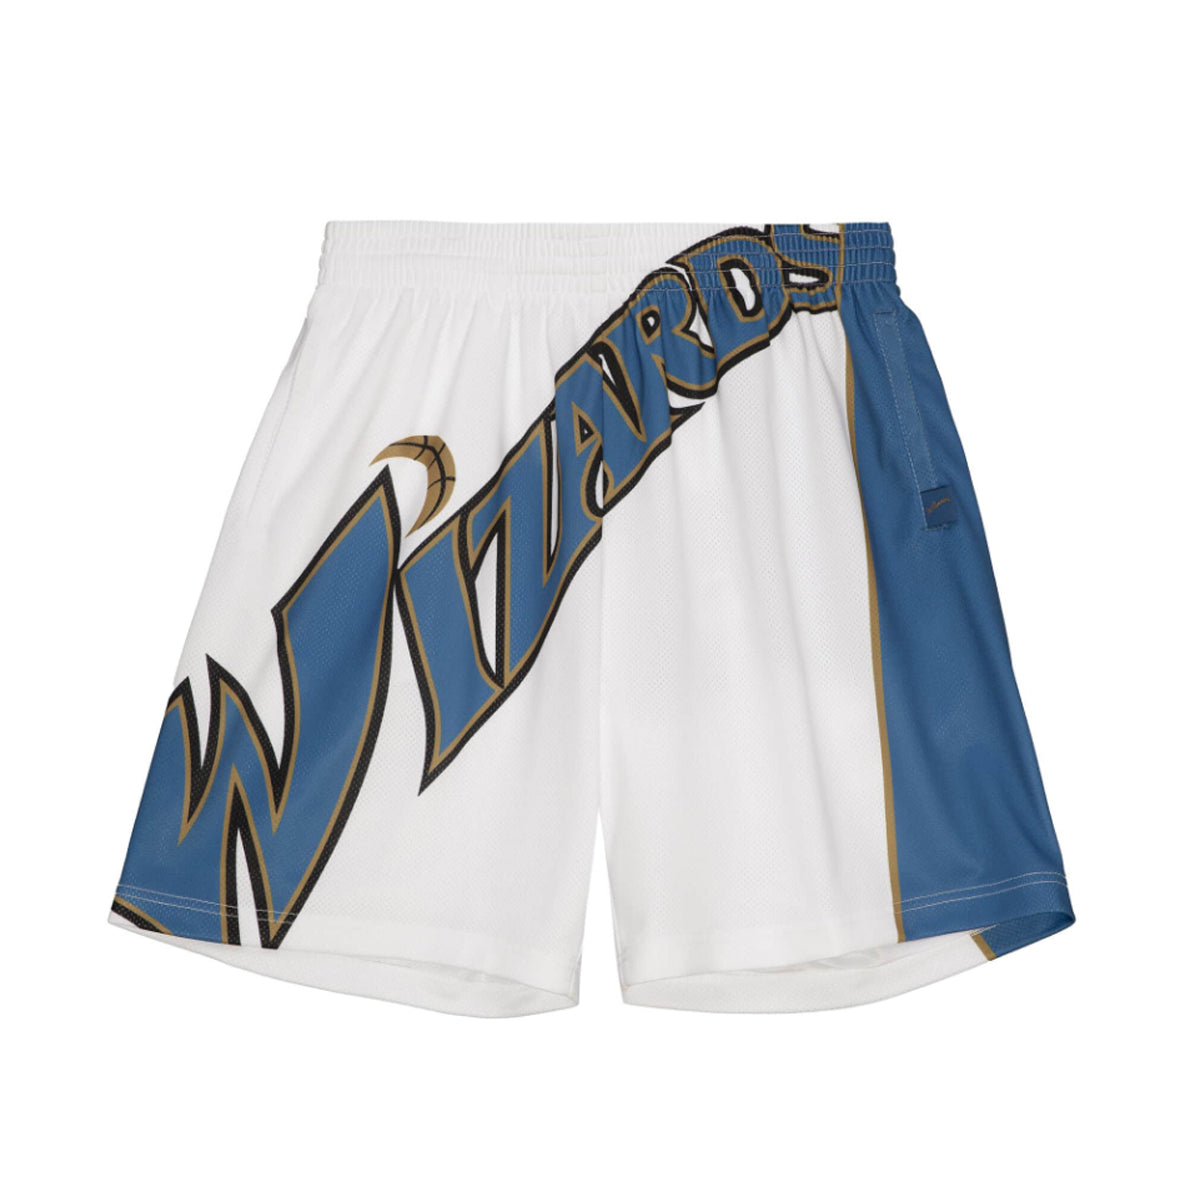 Adidas NBA Basketball Men's Washington Wizards Blank Jersey, Blue